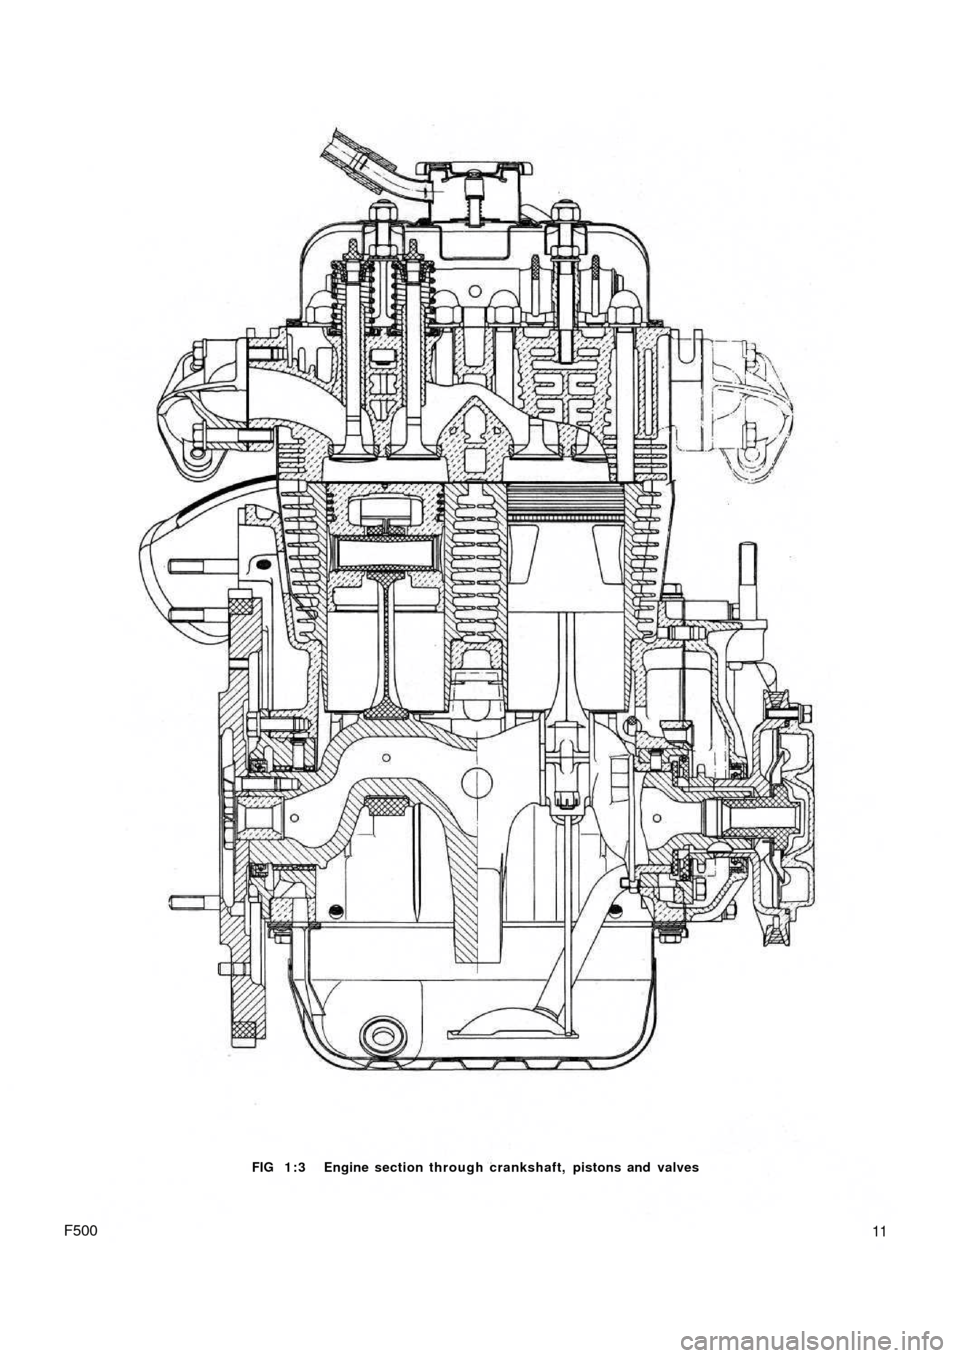 FIAT 500 1969 1.G Workshop Manual FIG 1 : 3  Engine section through crankshaft, pistons and  valves
F50011 